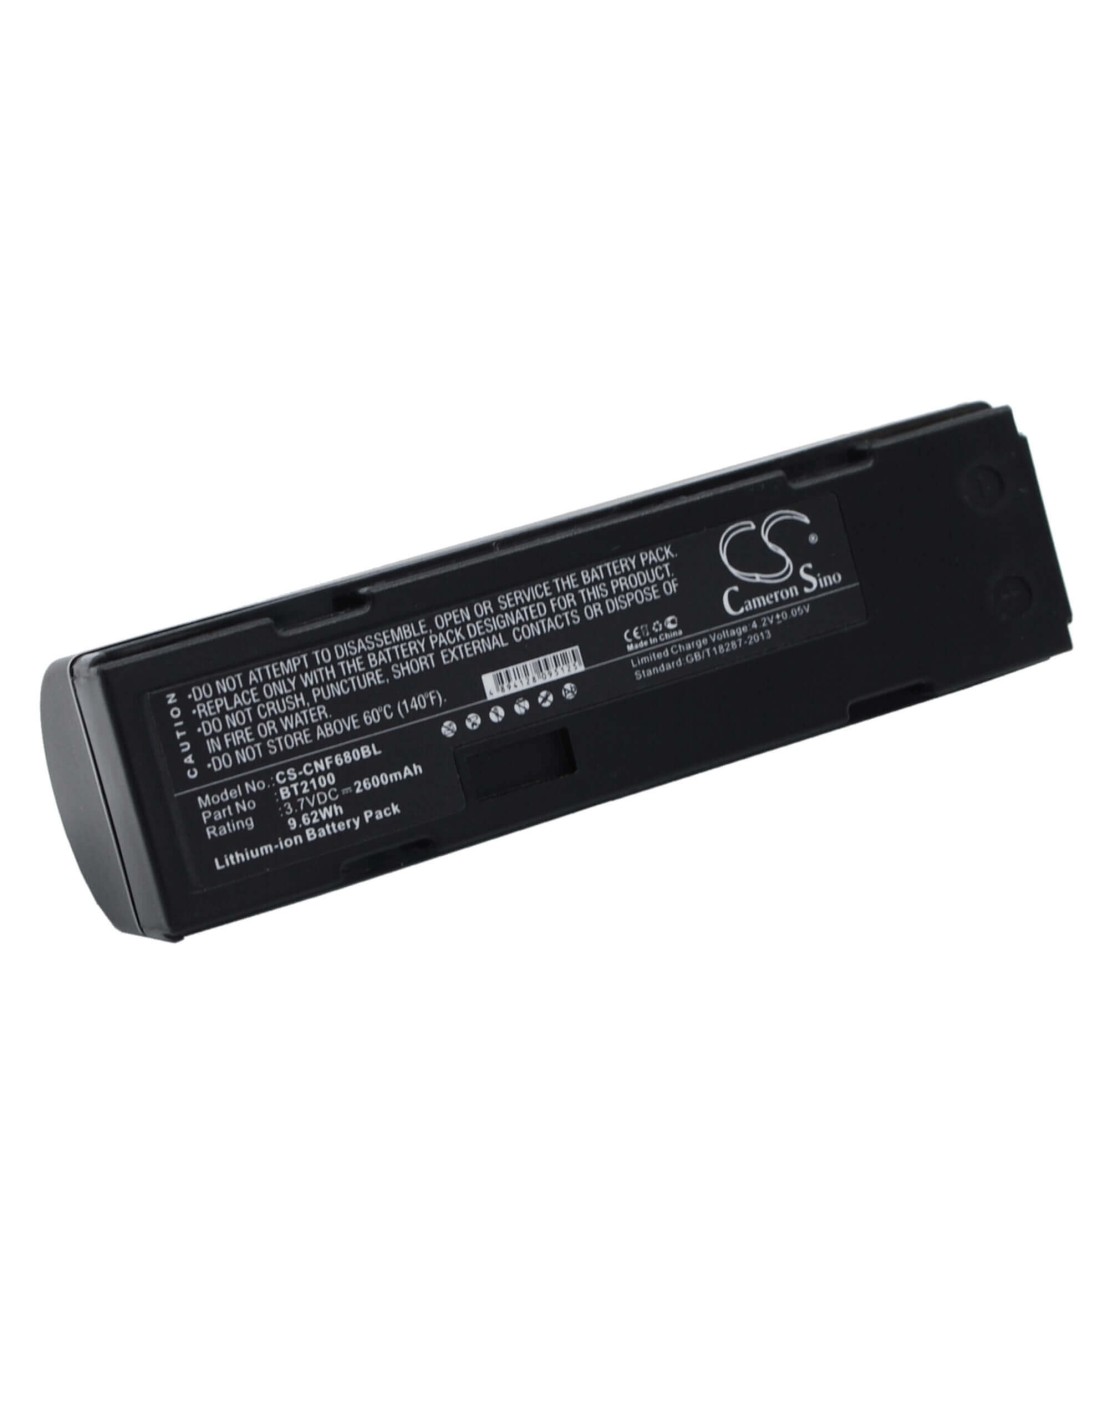 Battery for Cino 680bt, F680bt, F780bt 3.7V, 2600mAh - 9.62Wh